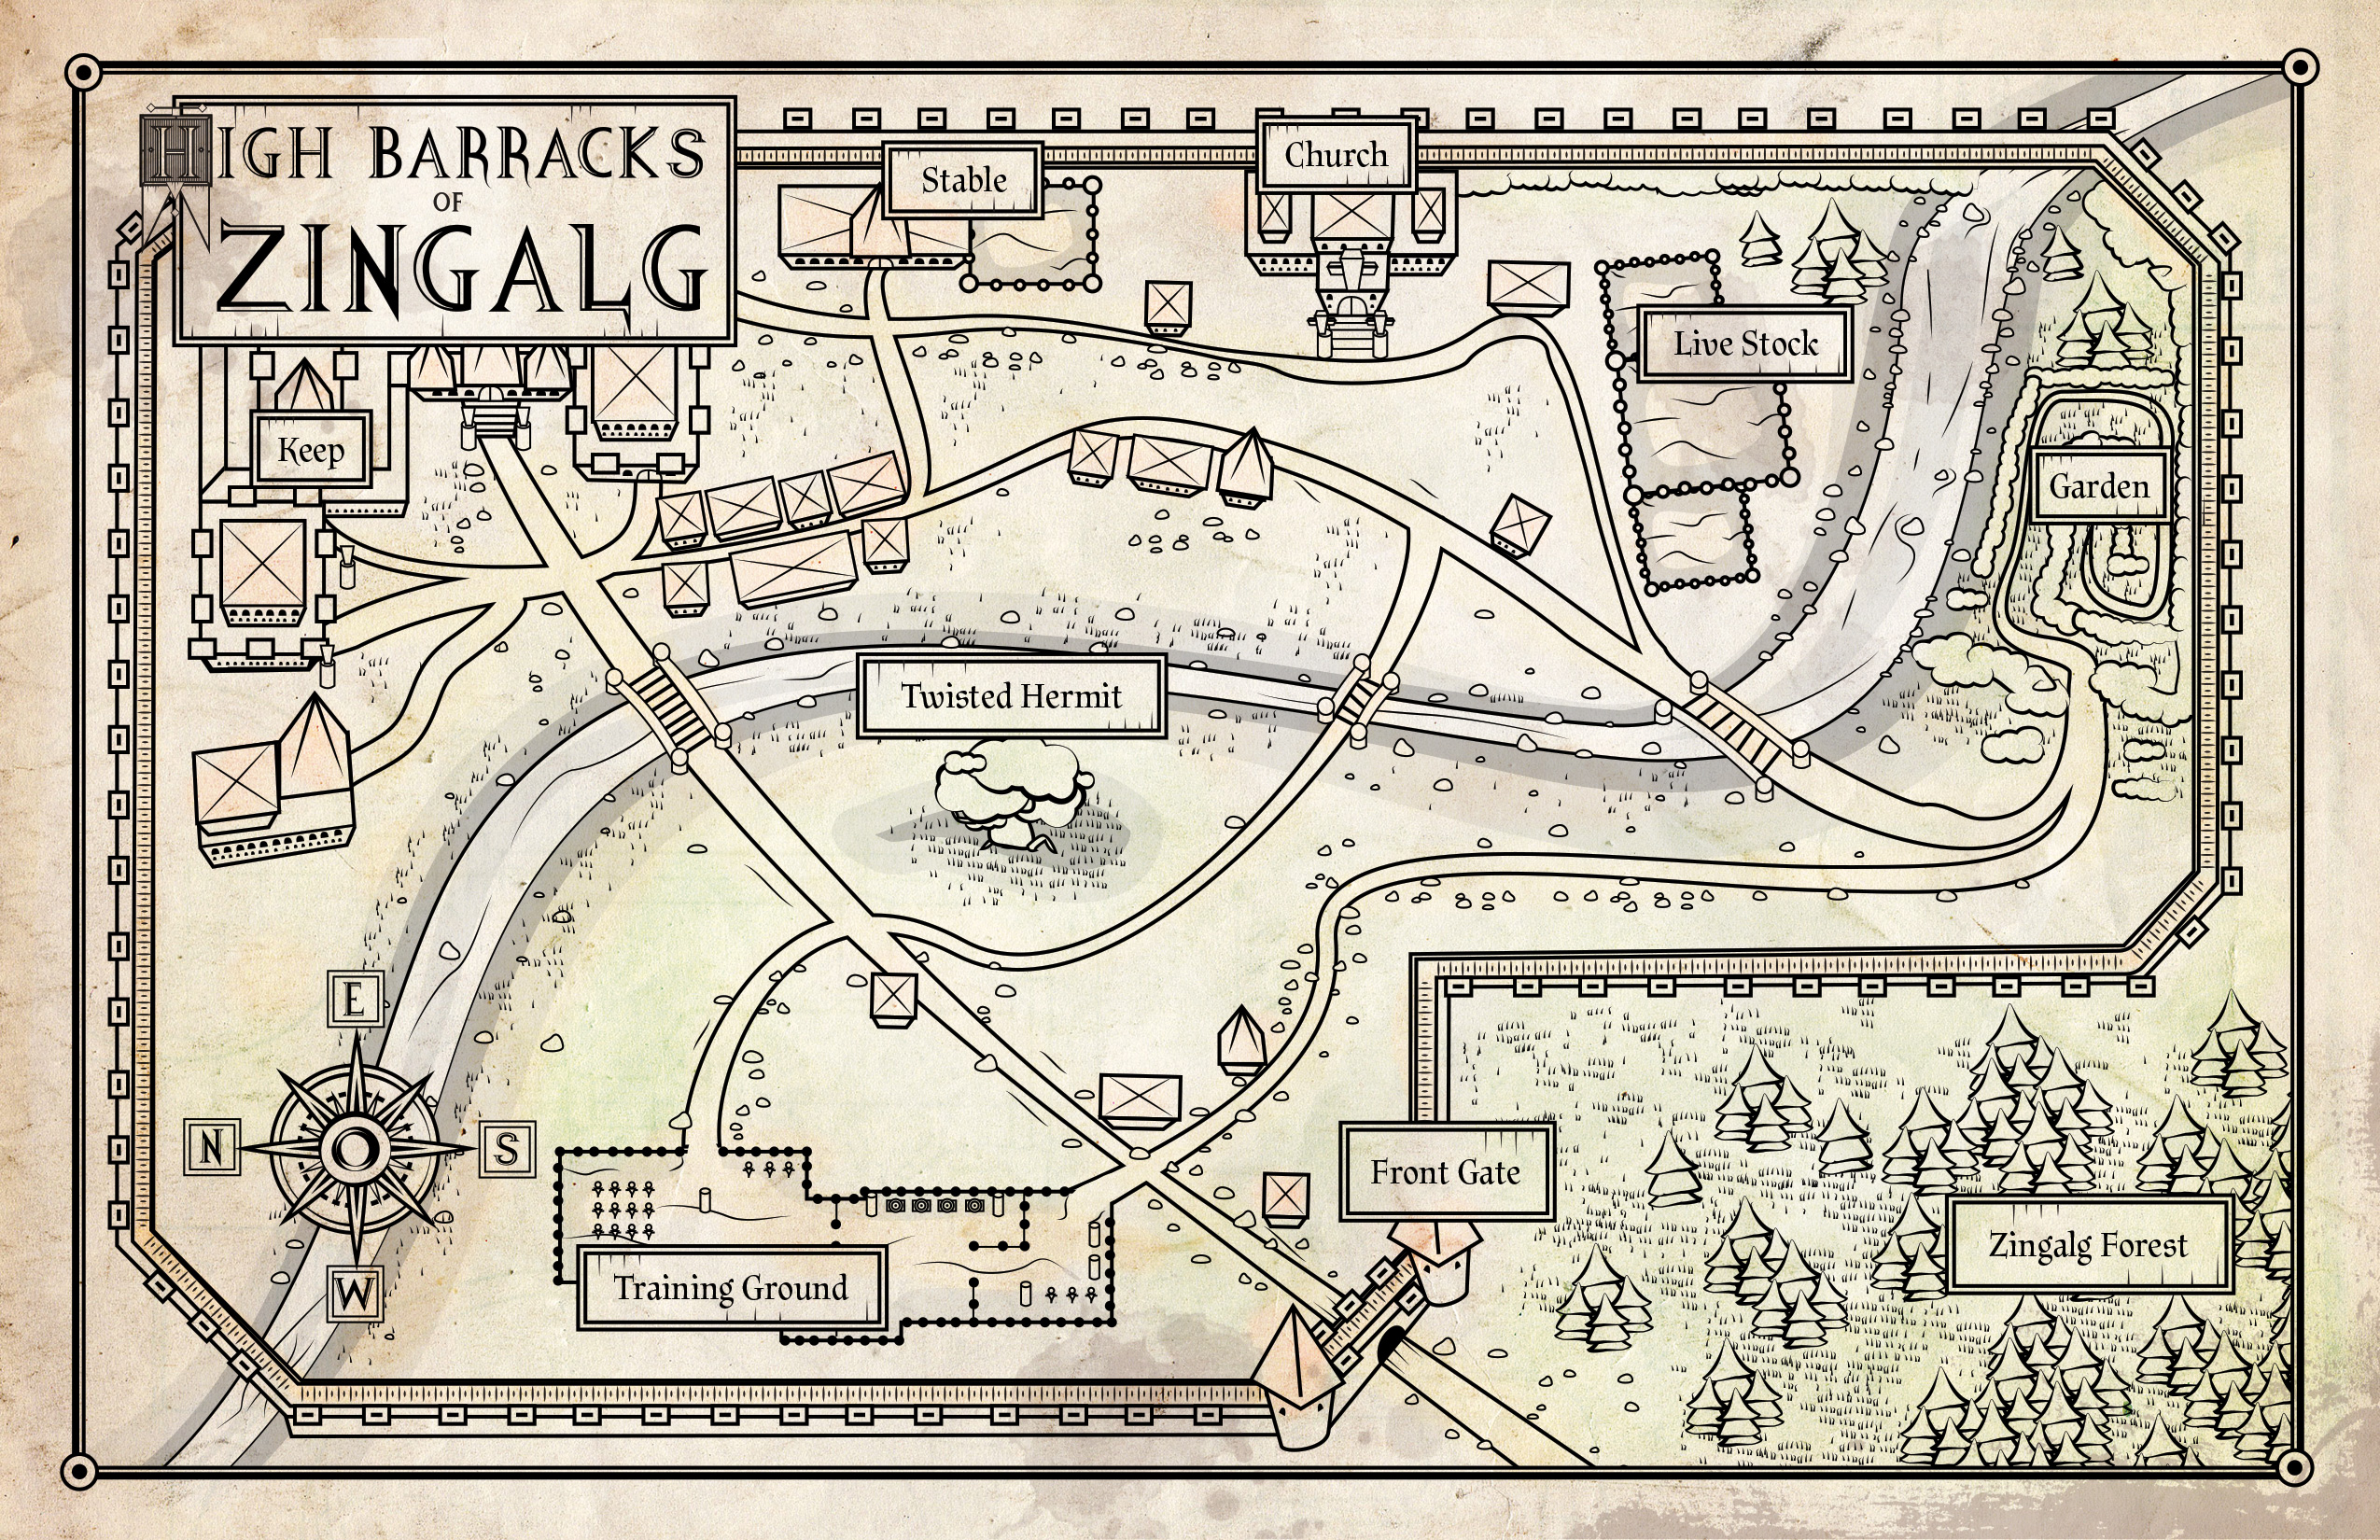 High Barracks of Zingalg Map